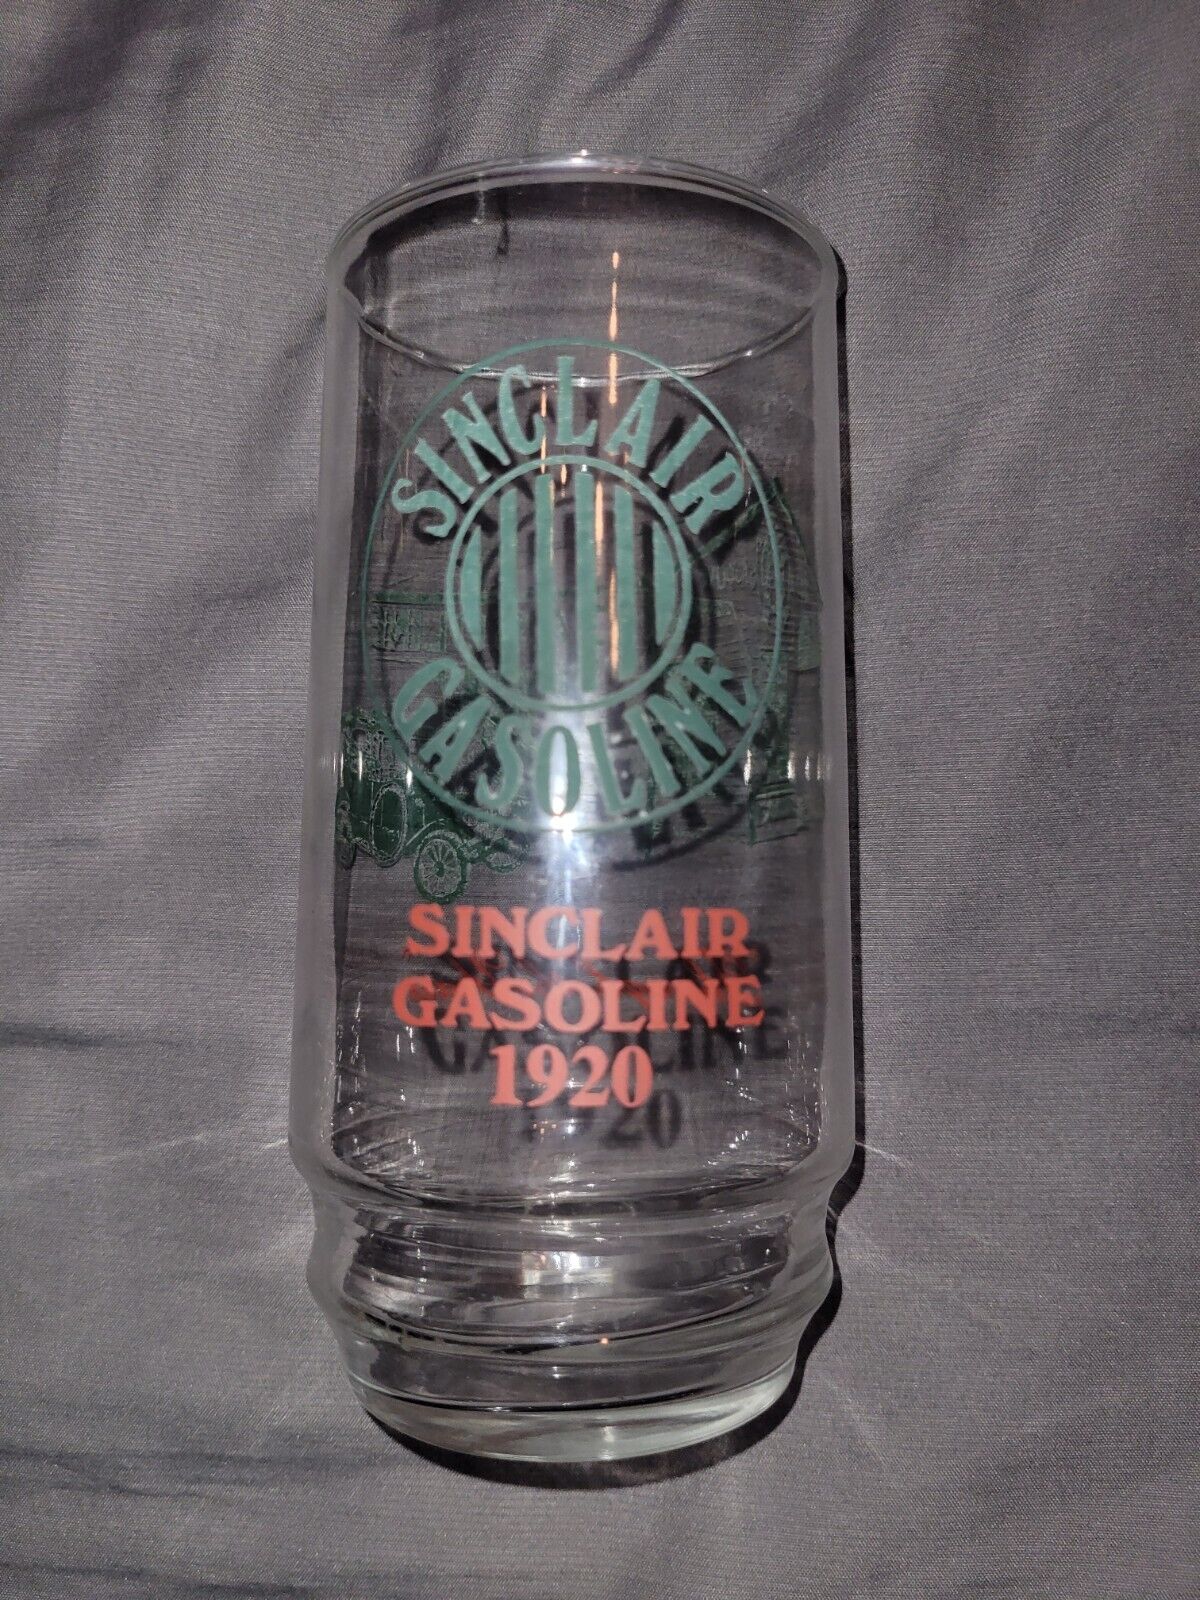 Sinclair gasoline vintage glass nostalgia cup Collectible Vintage Kitchenware